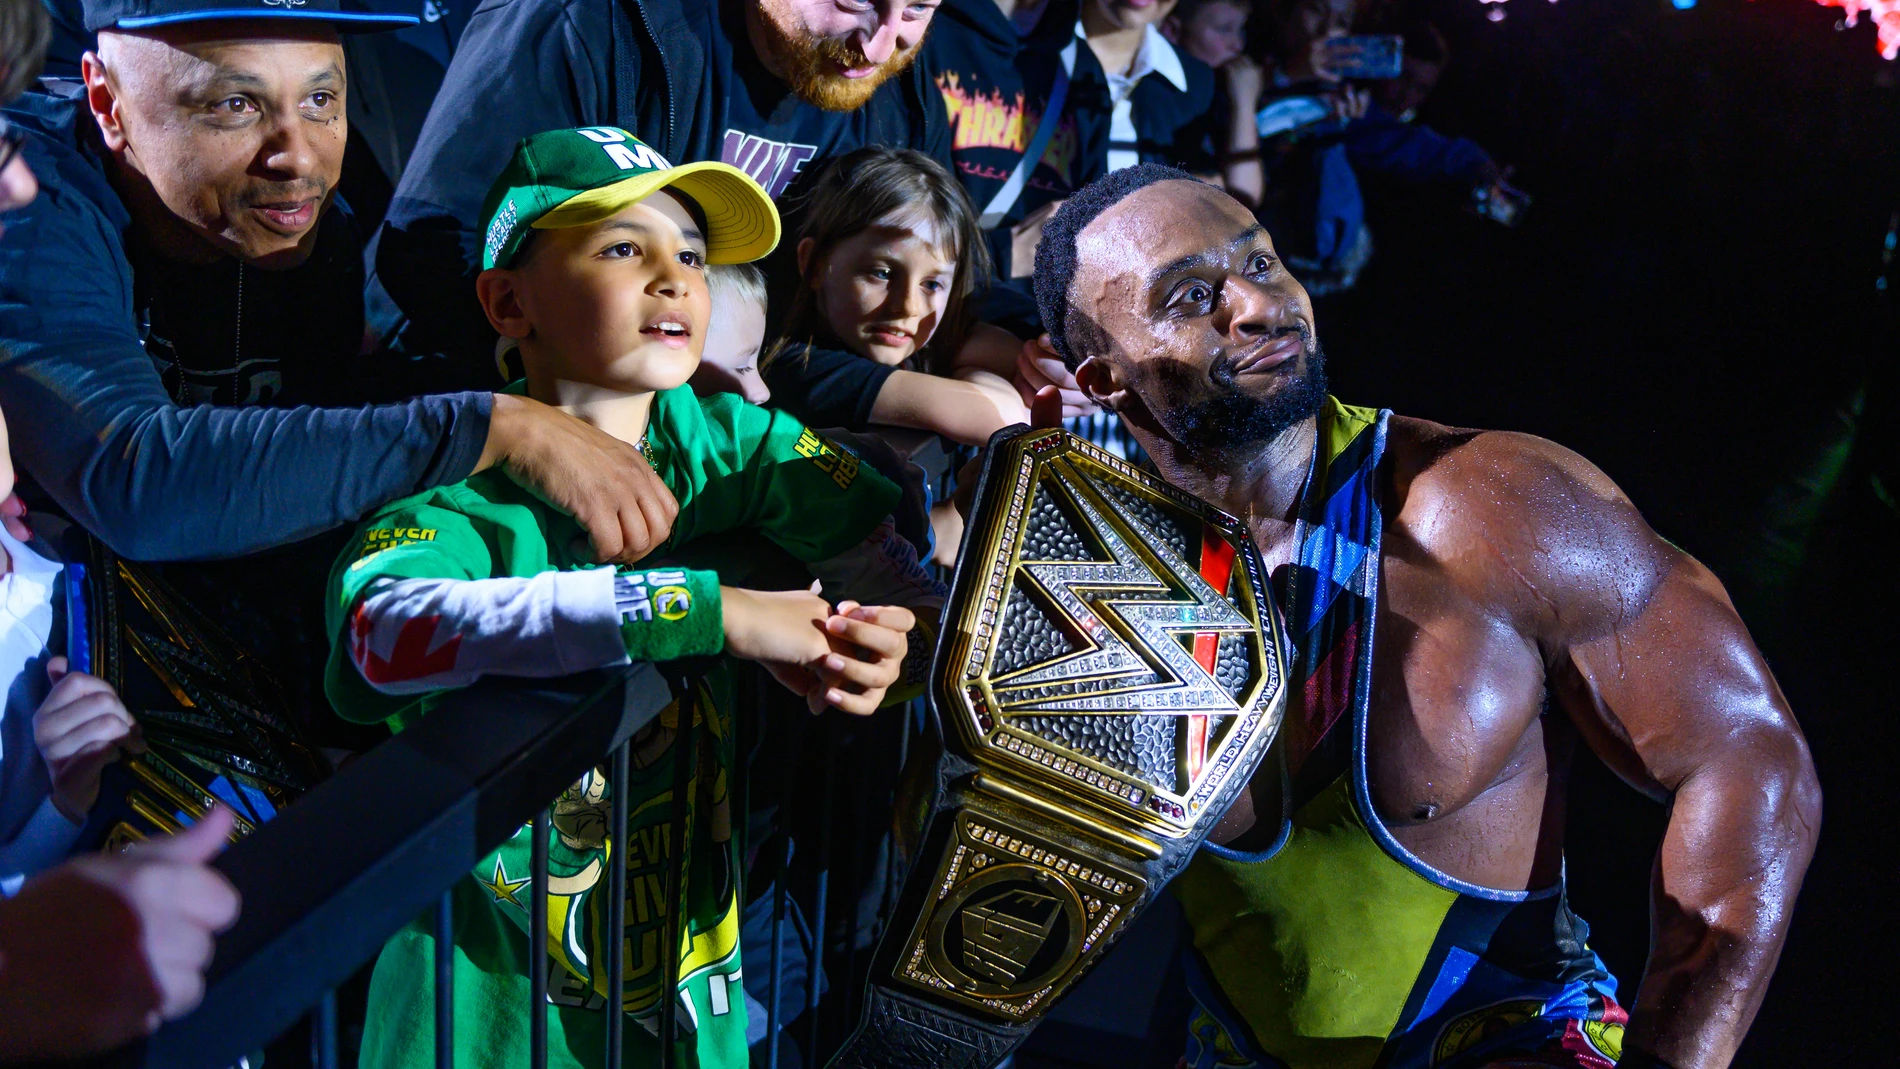 Big E, actual campéon absoluto de WWE, junto a un joven aficionado en primera fila